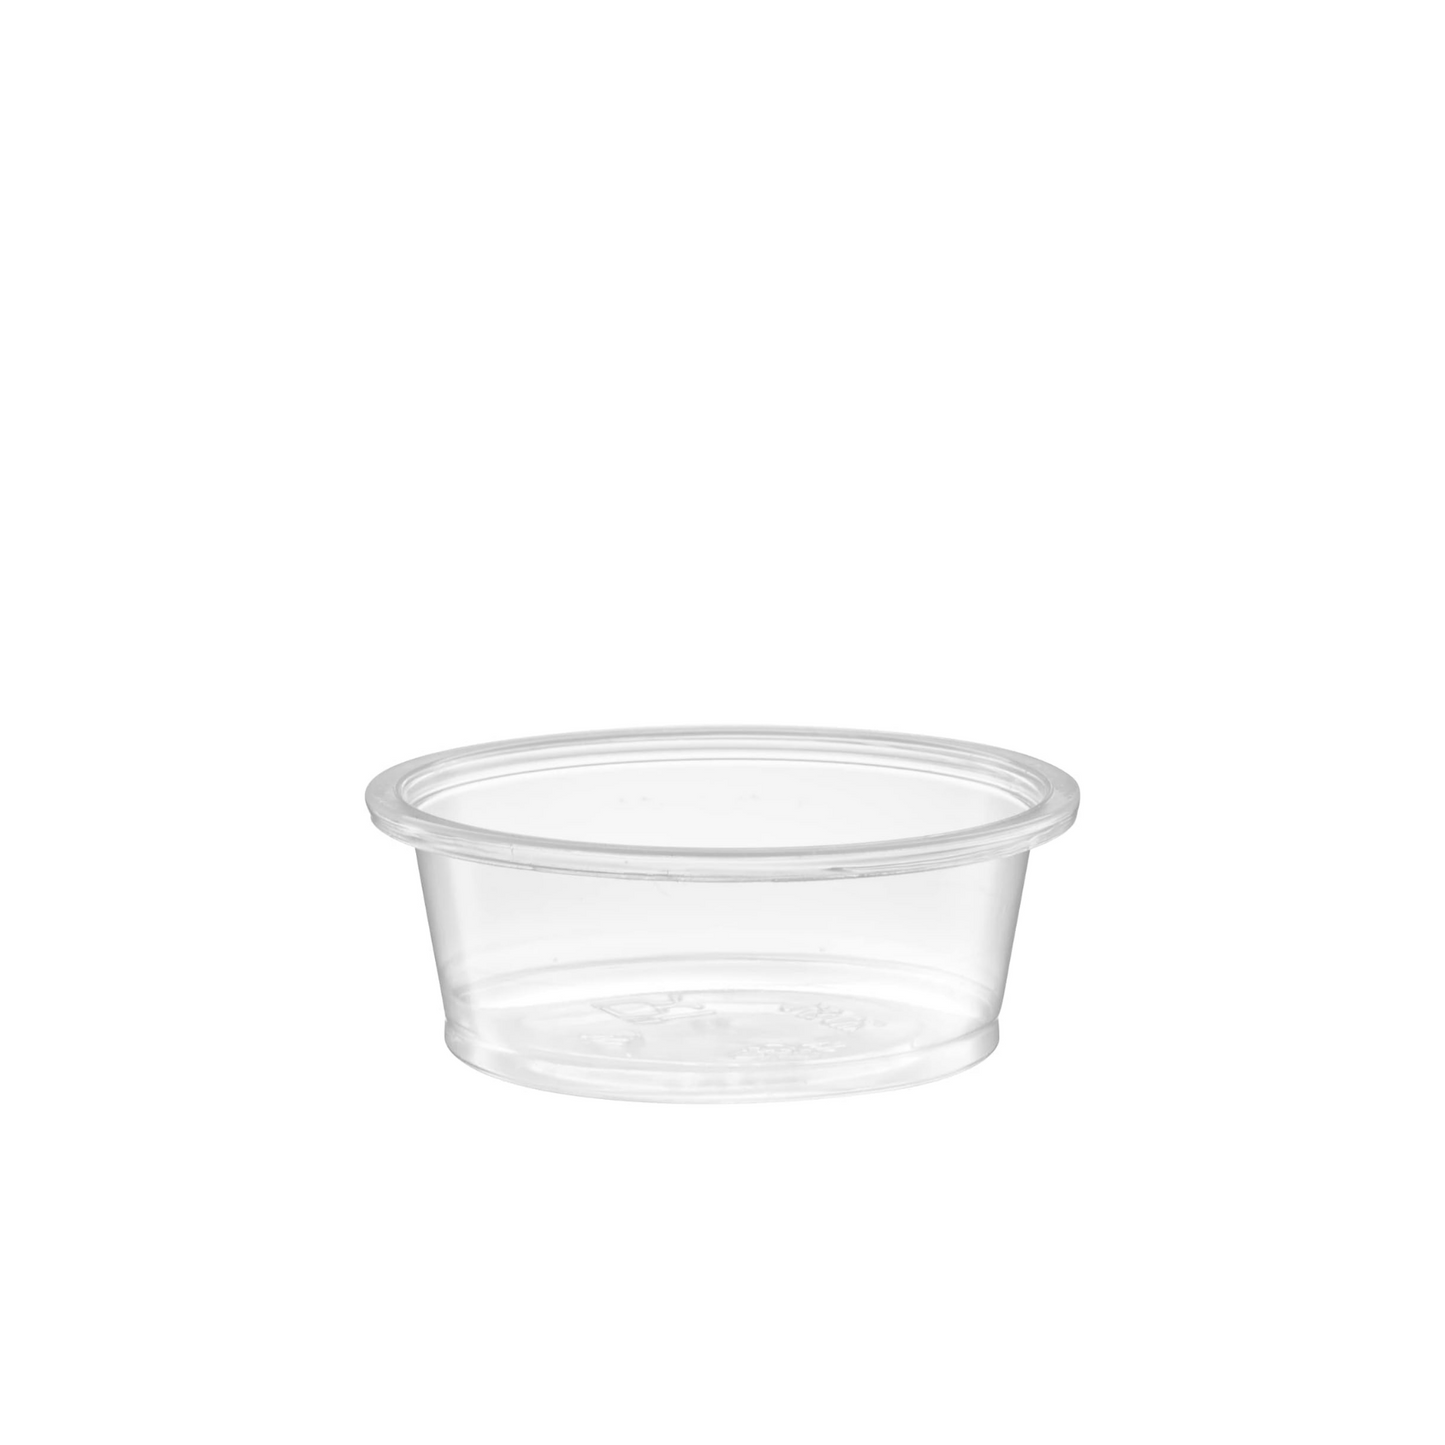 1.5 oz Clear Portion Cups without Lids Wholesale